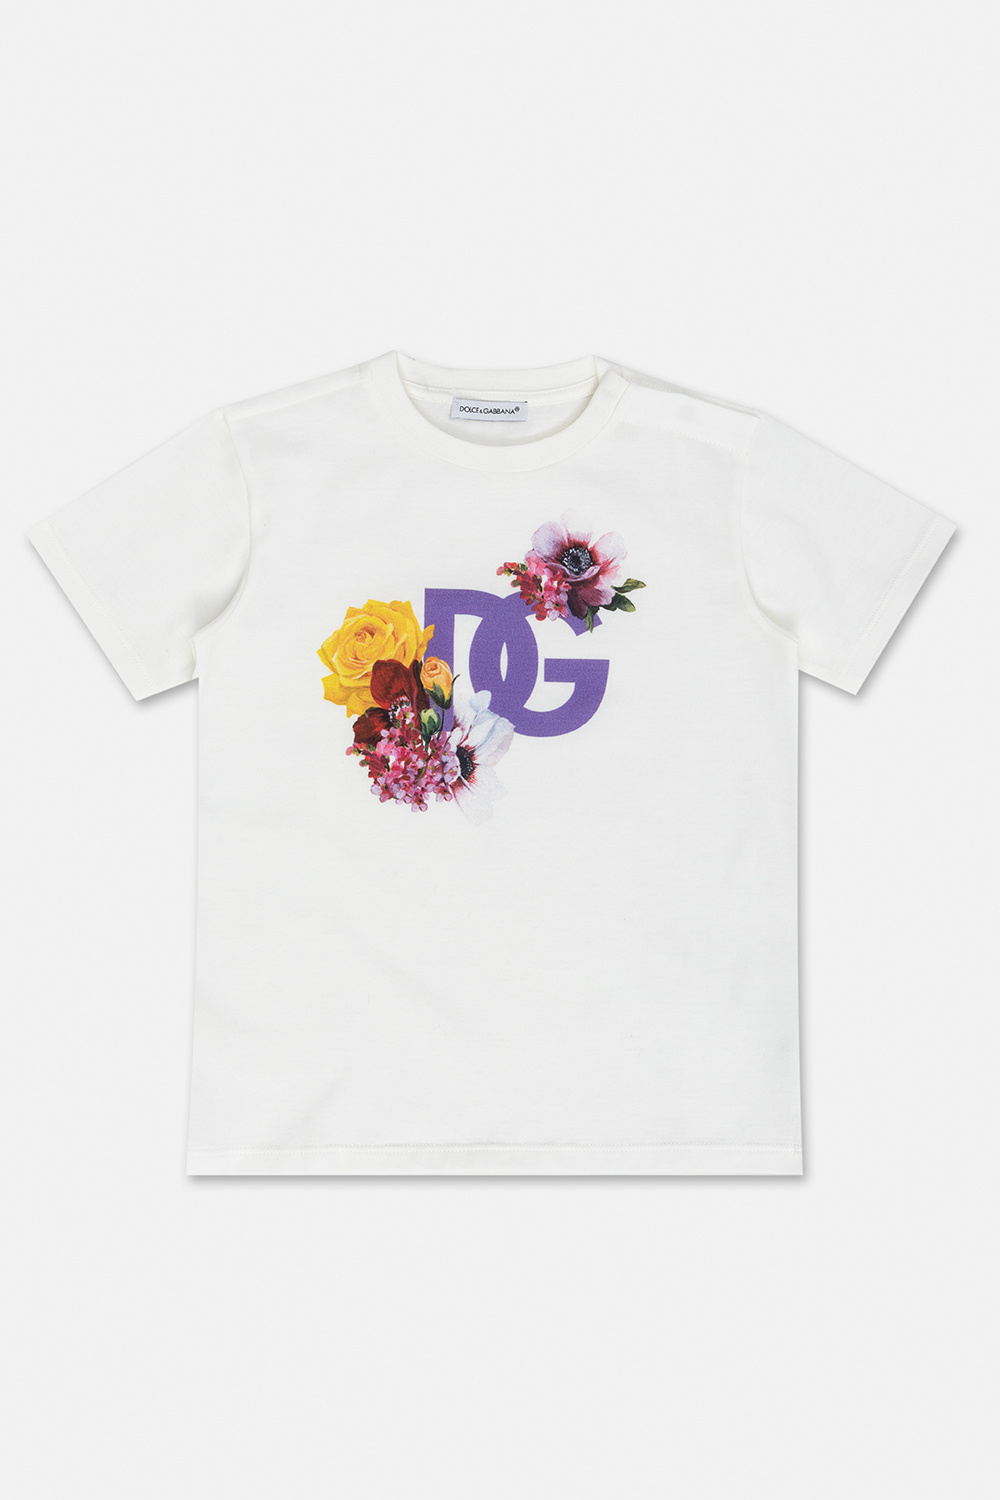 dolce gabbana floral print palazzo pants item Kids T-shirt with logo